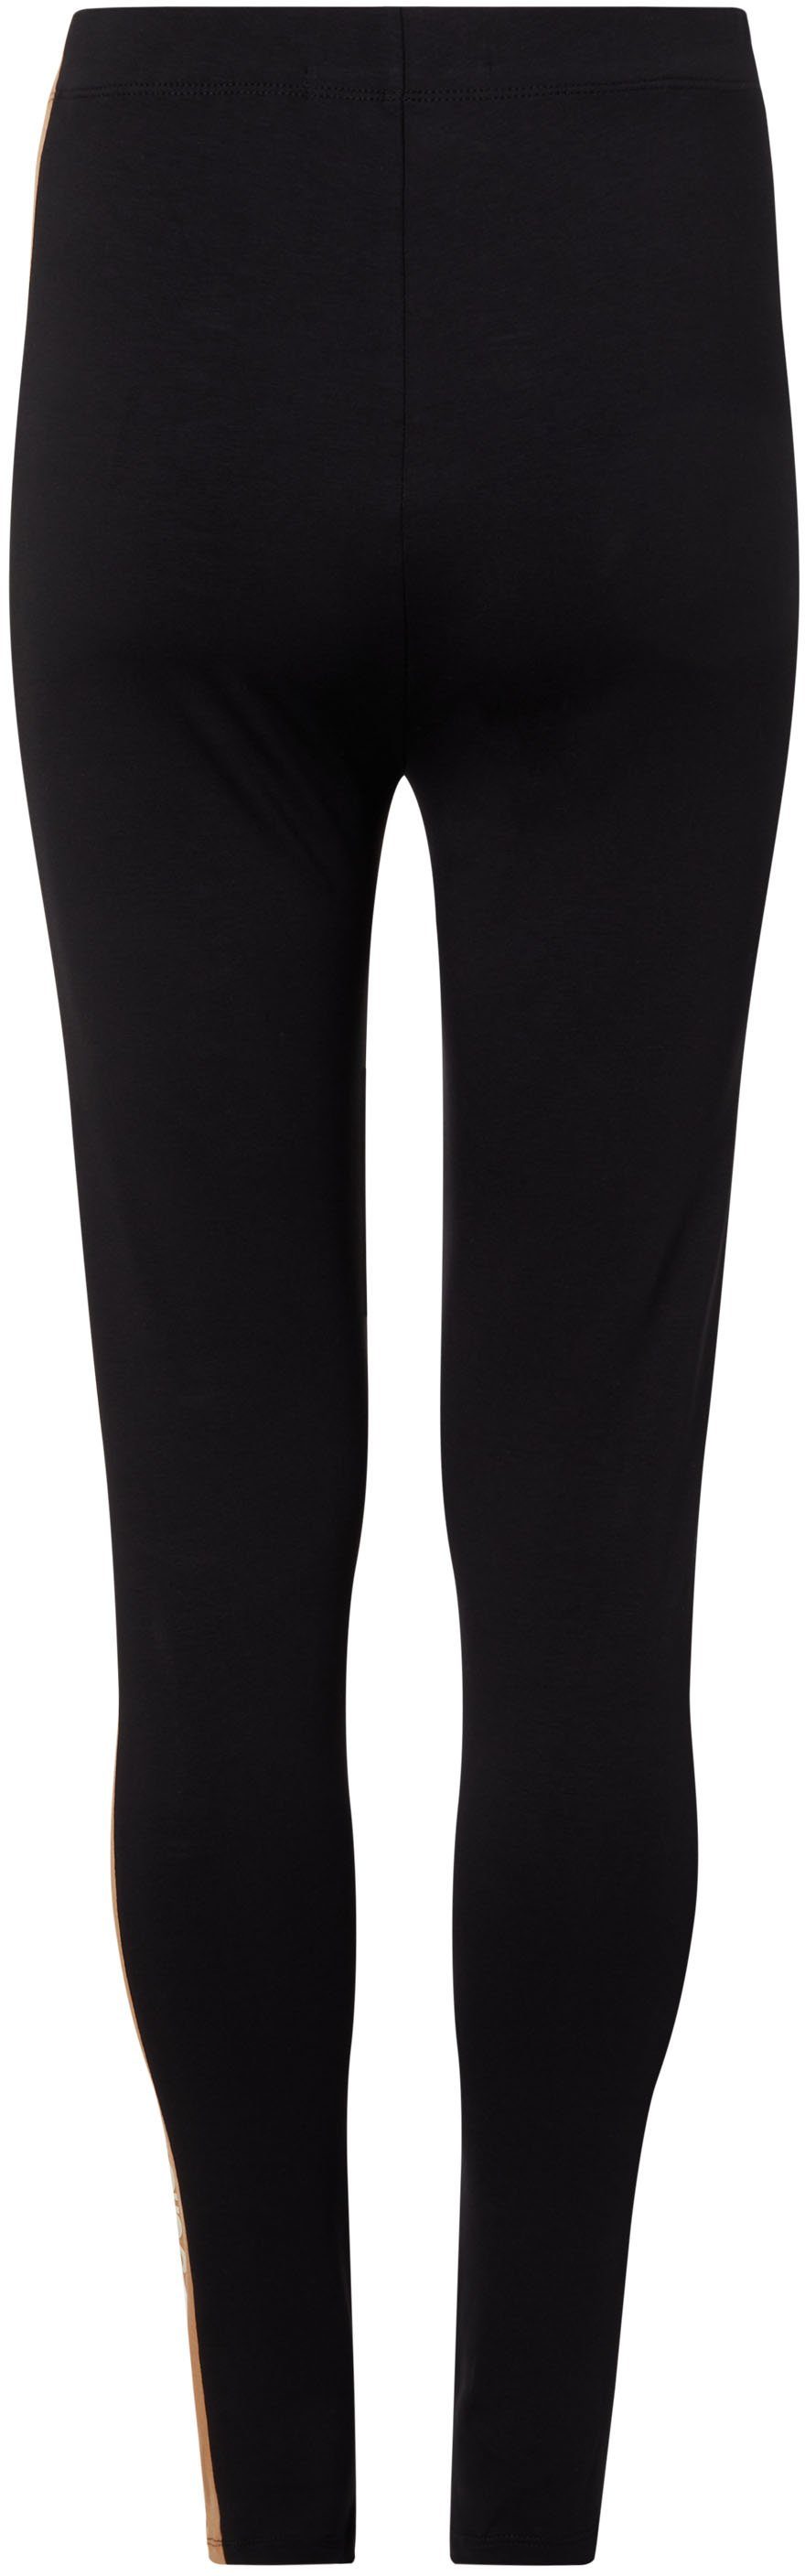 Calvin Klein Jeans COLOR Camel BLOCKING CK-Schriftzug LEGGINGS Ck in Black/ mit Timeless Leggings Kontrastfarbe